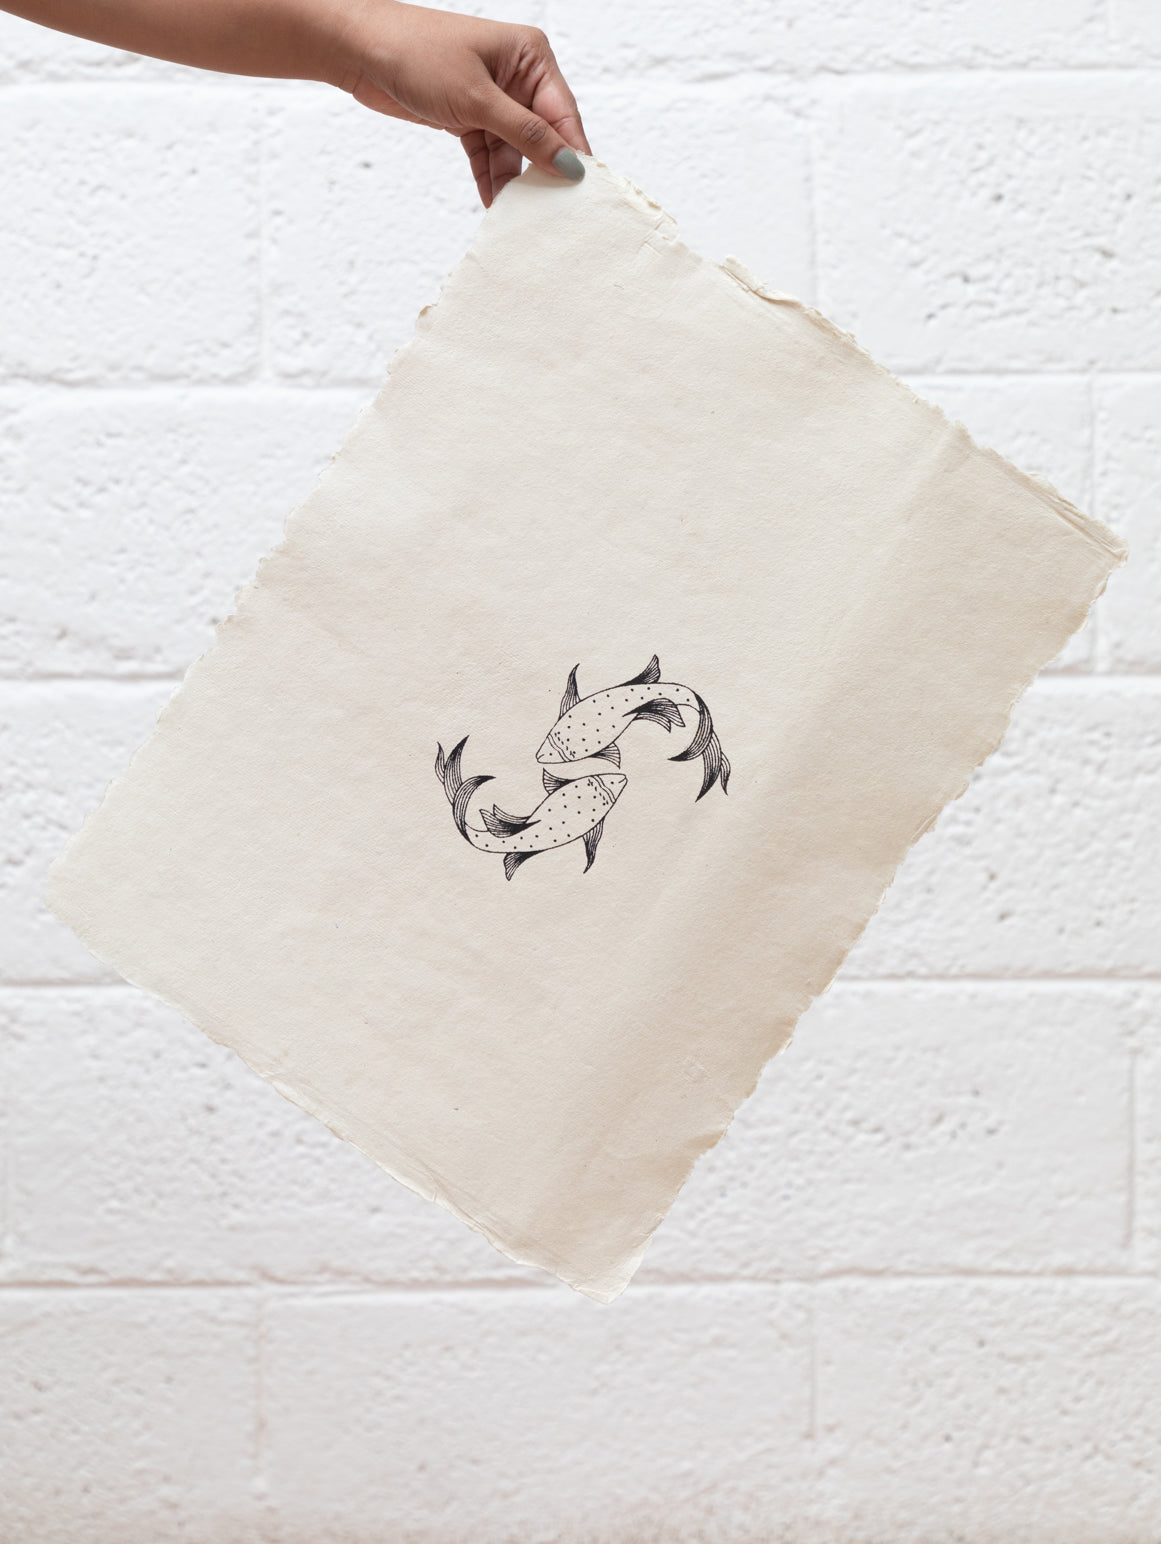 Koi Fish Art Print On Handmade Cotton Paper